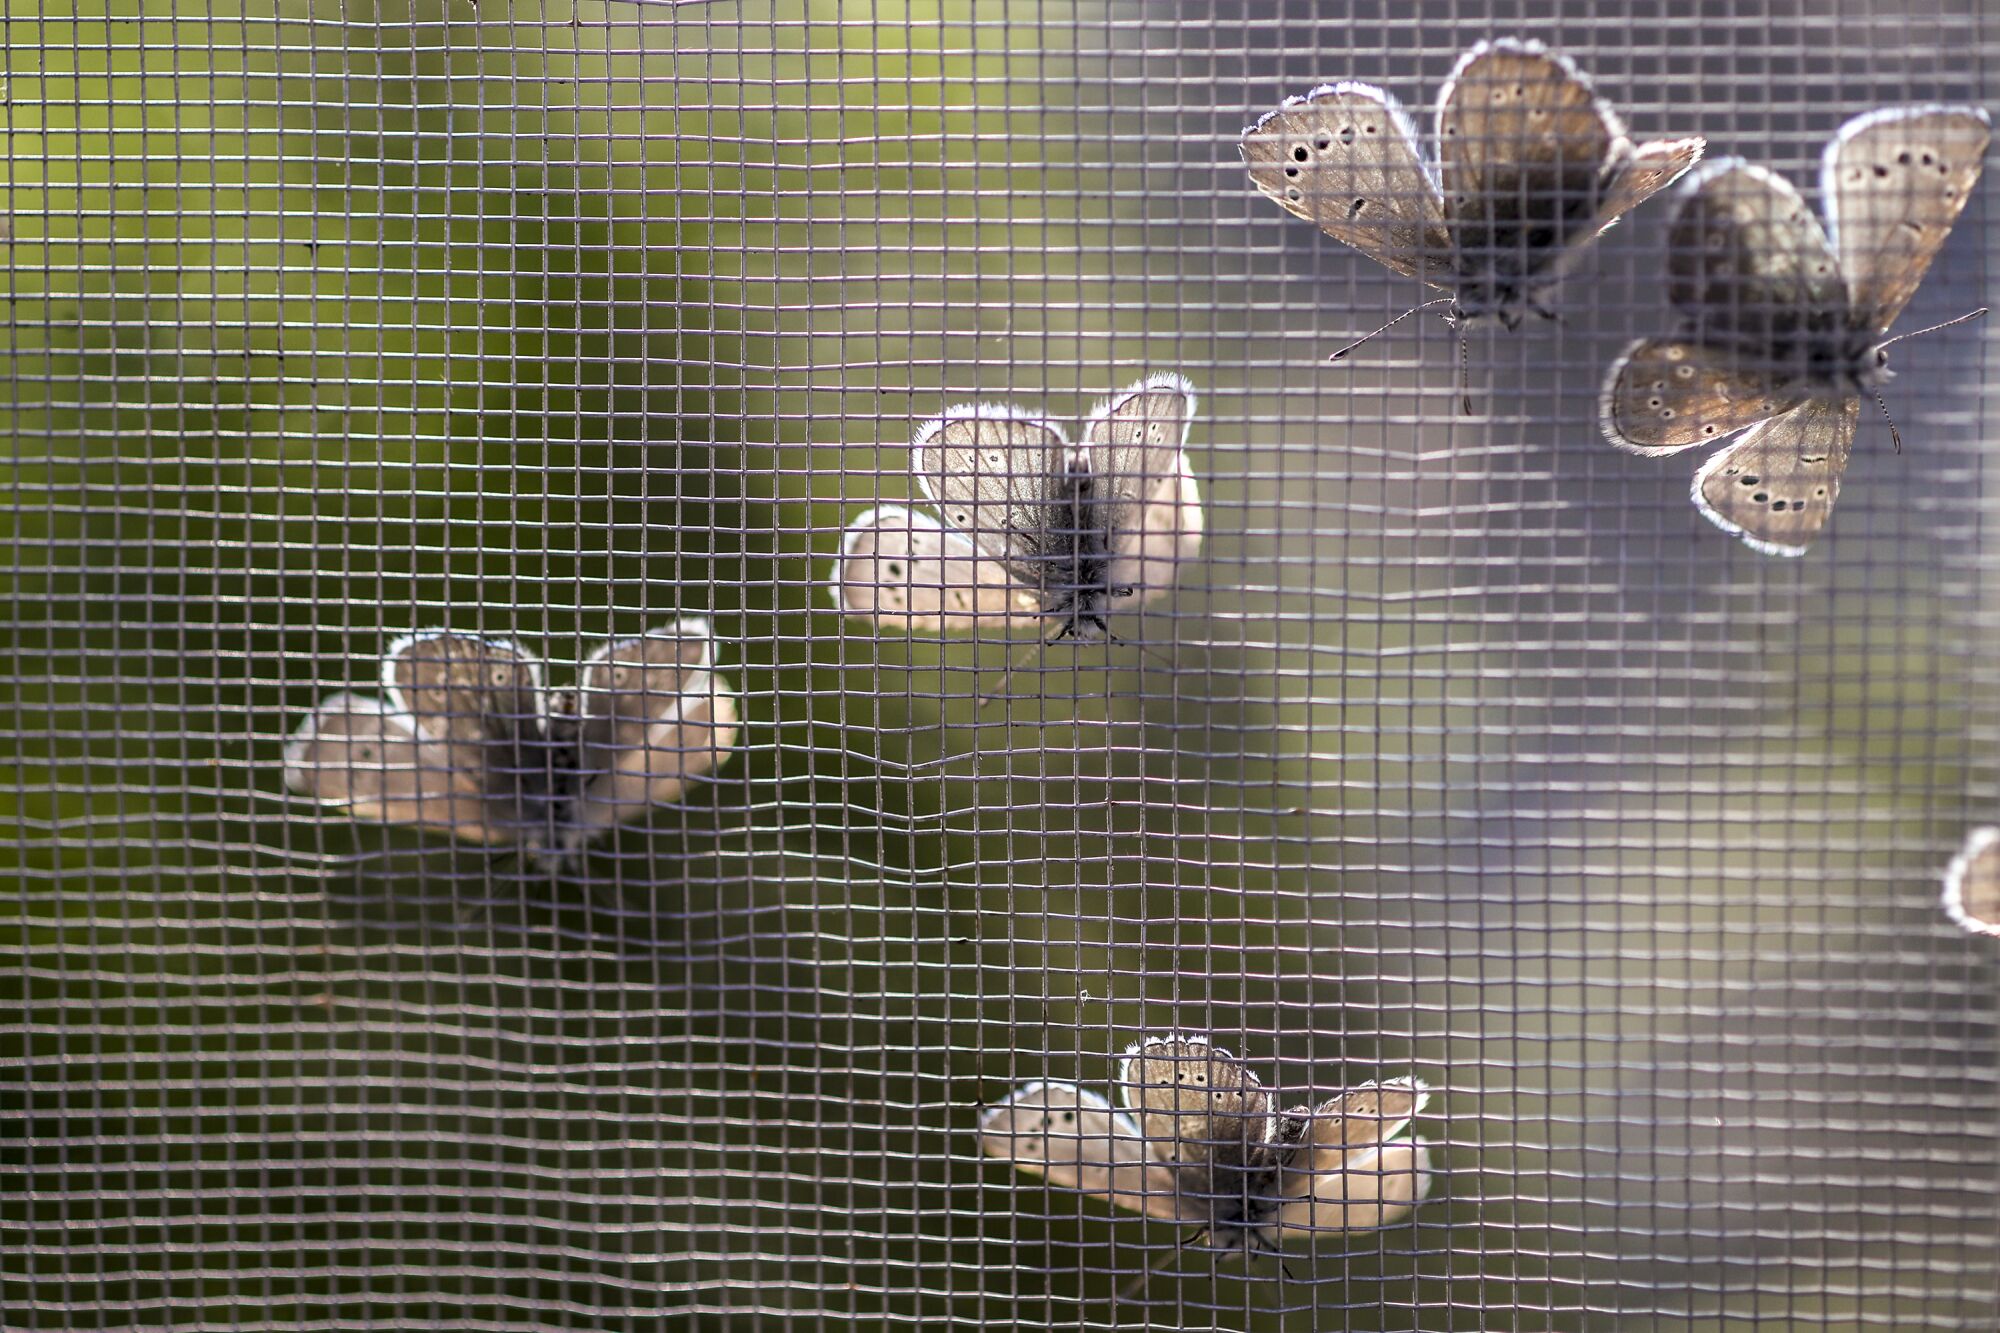 Butterflies cling to mesh.